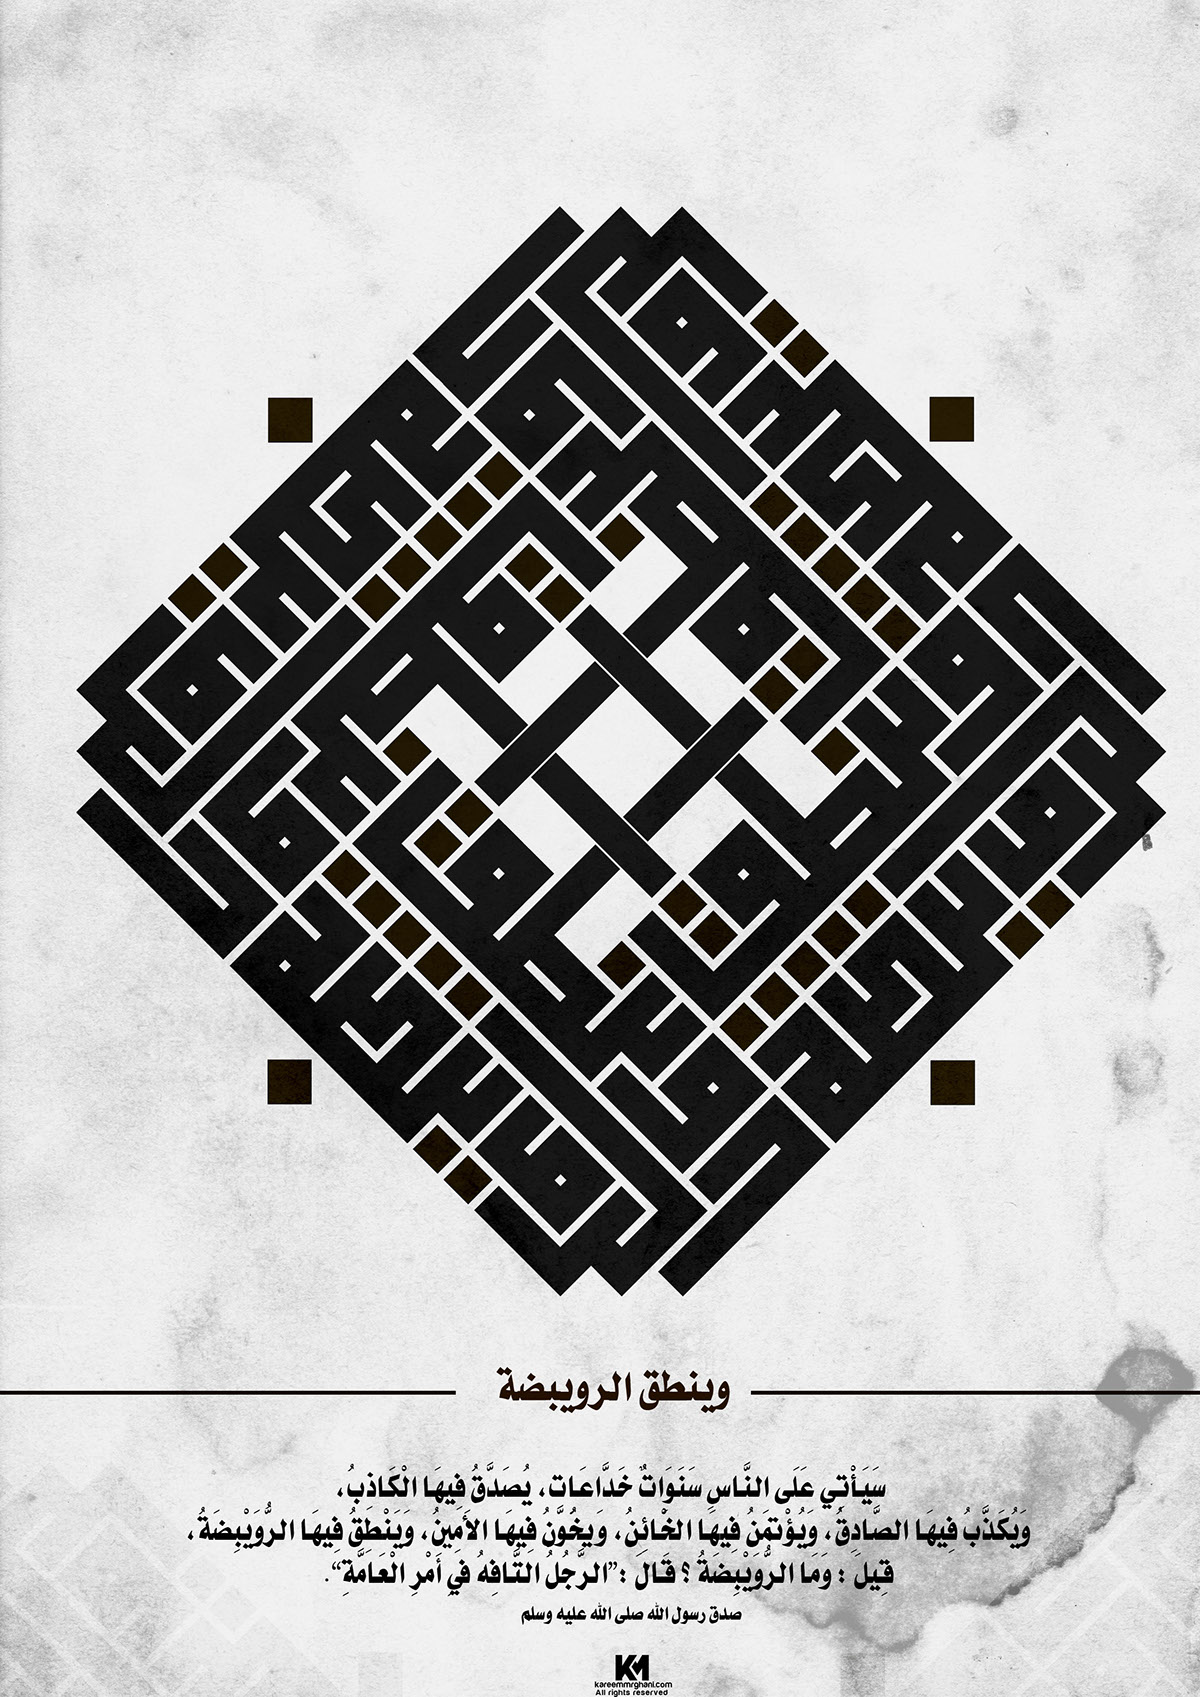 #typography #design #islamic #Calligraphy